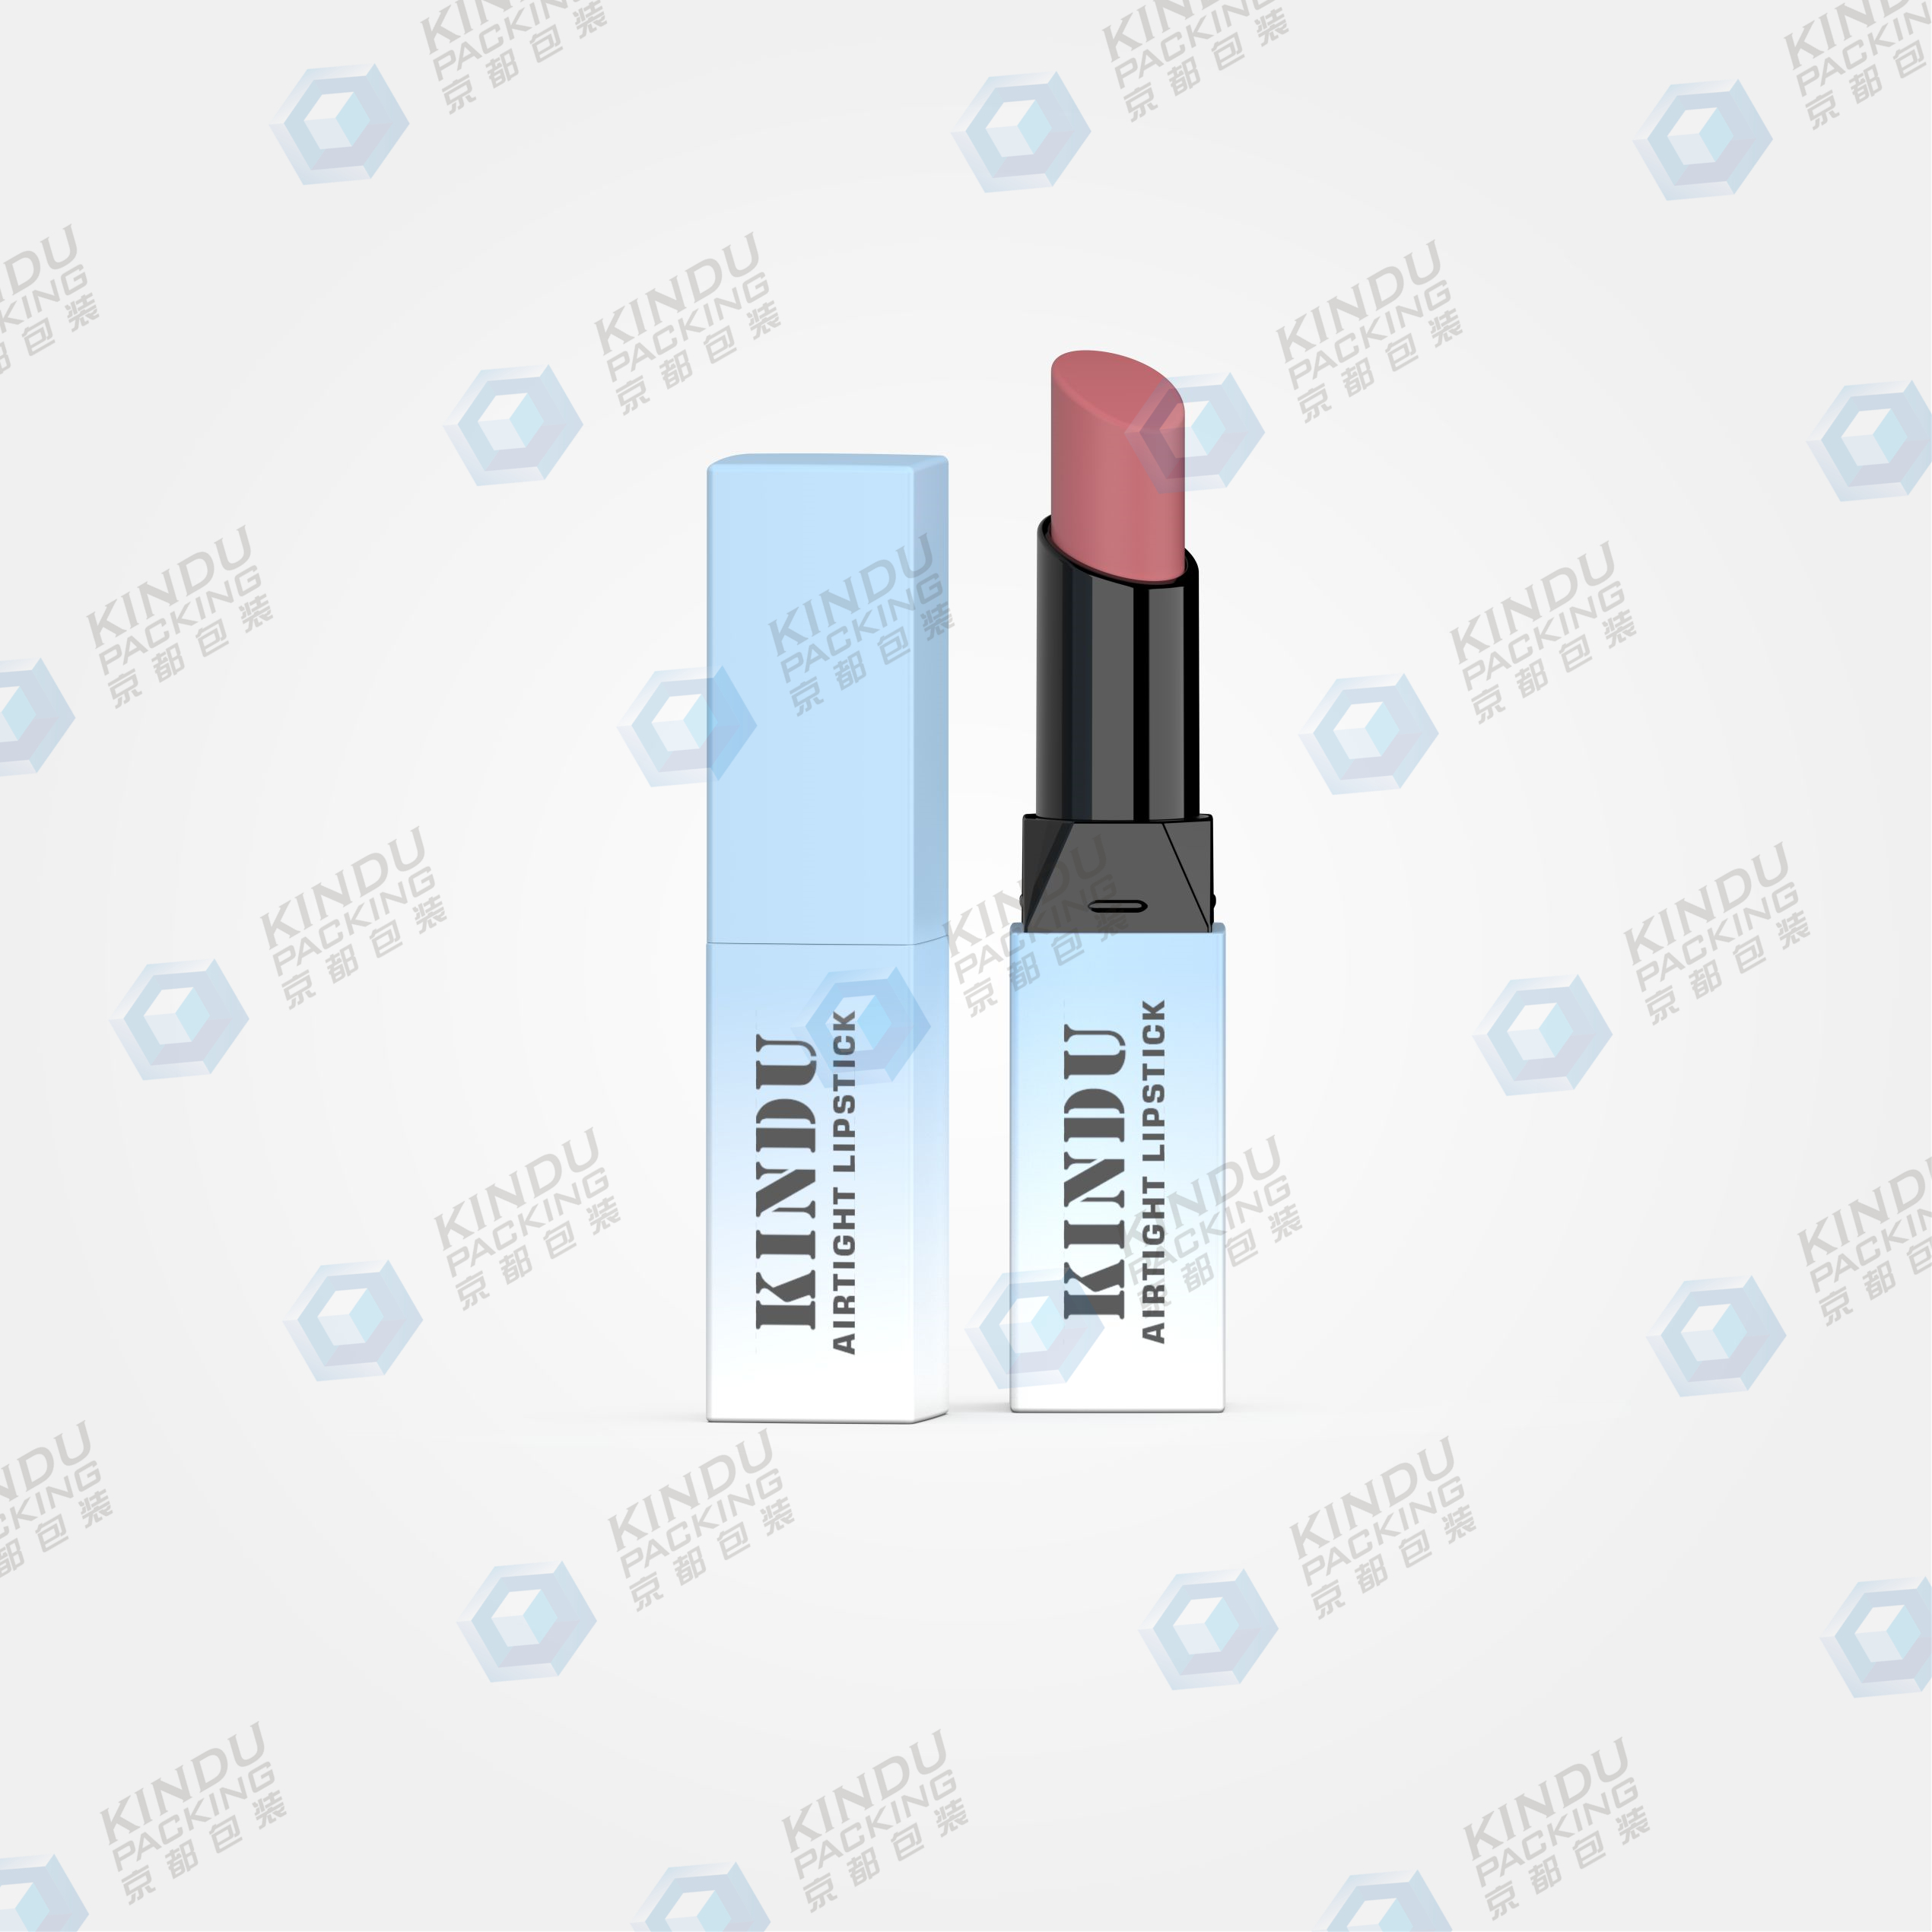 86.30 mm x 19.45 mm Airtight Lipstick Packaging (ZH-K0226)